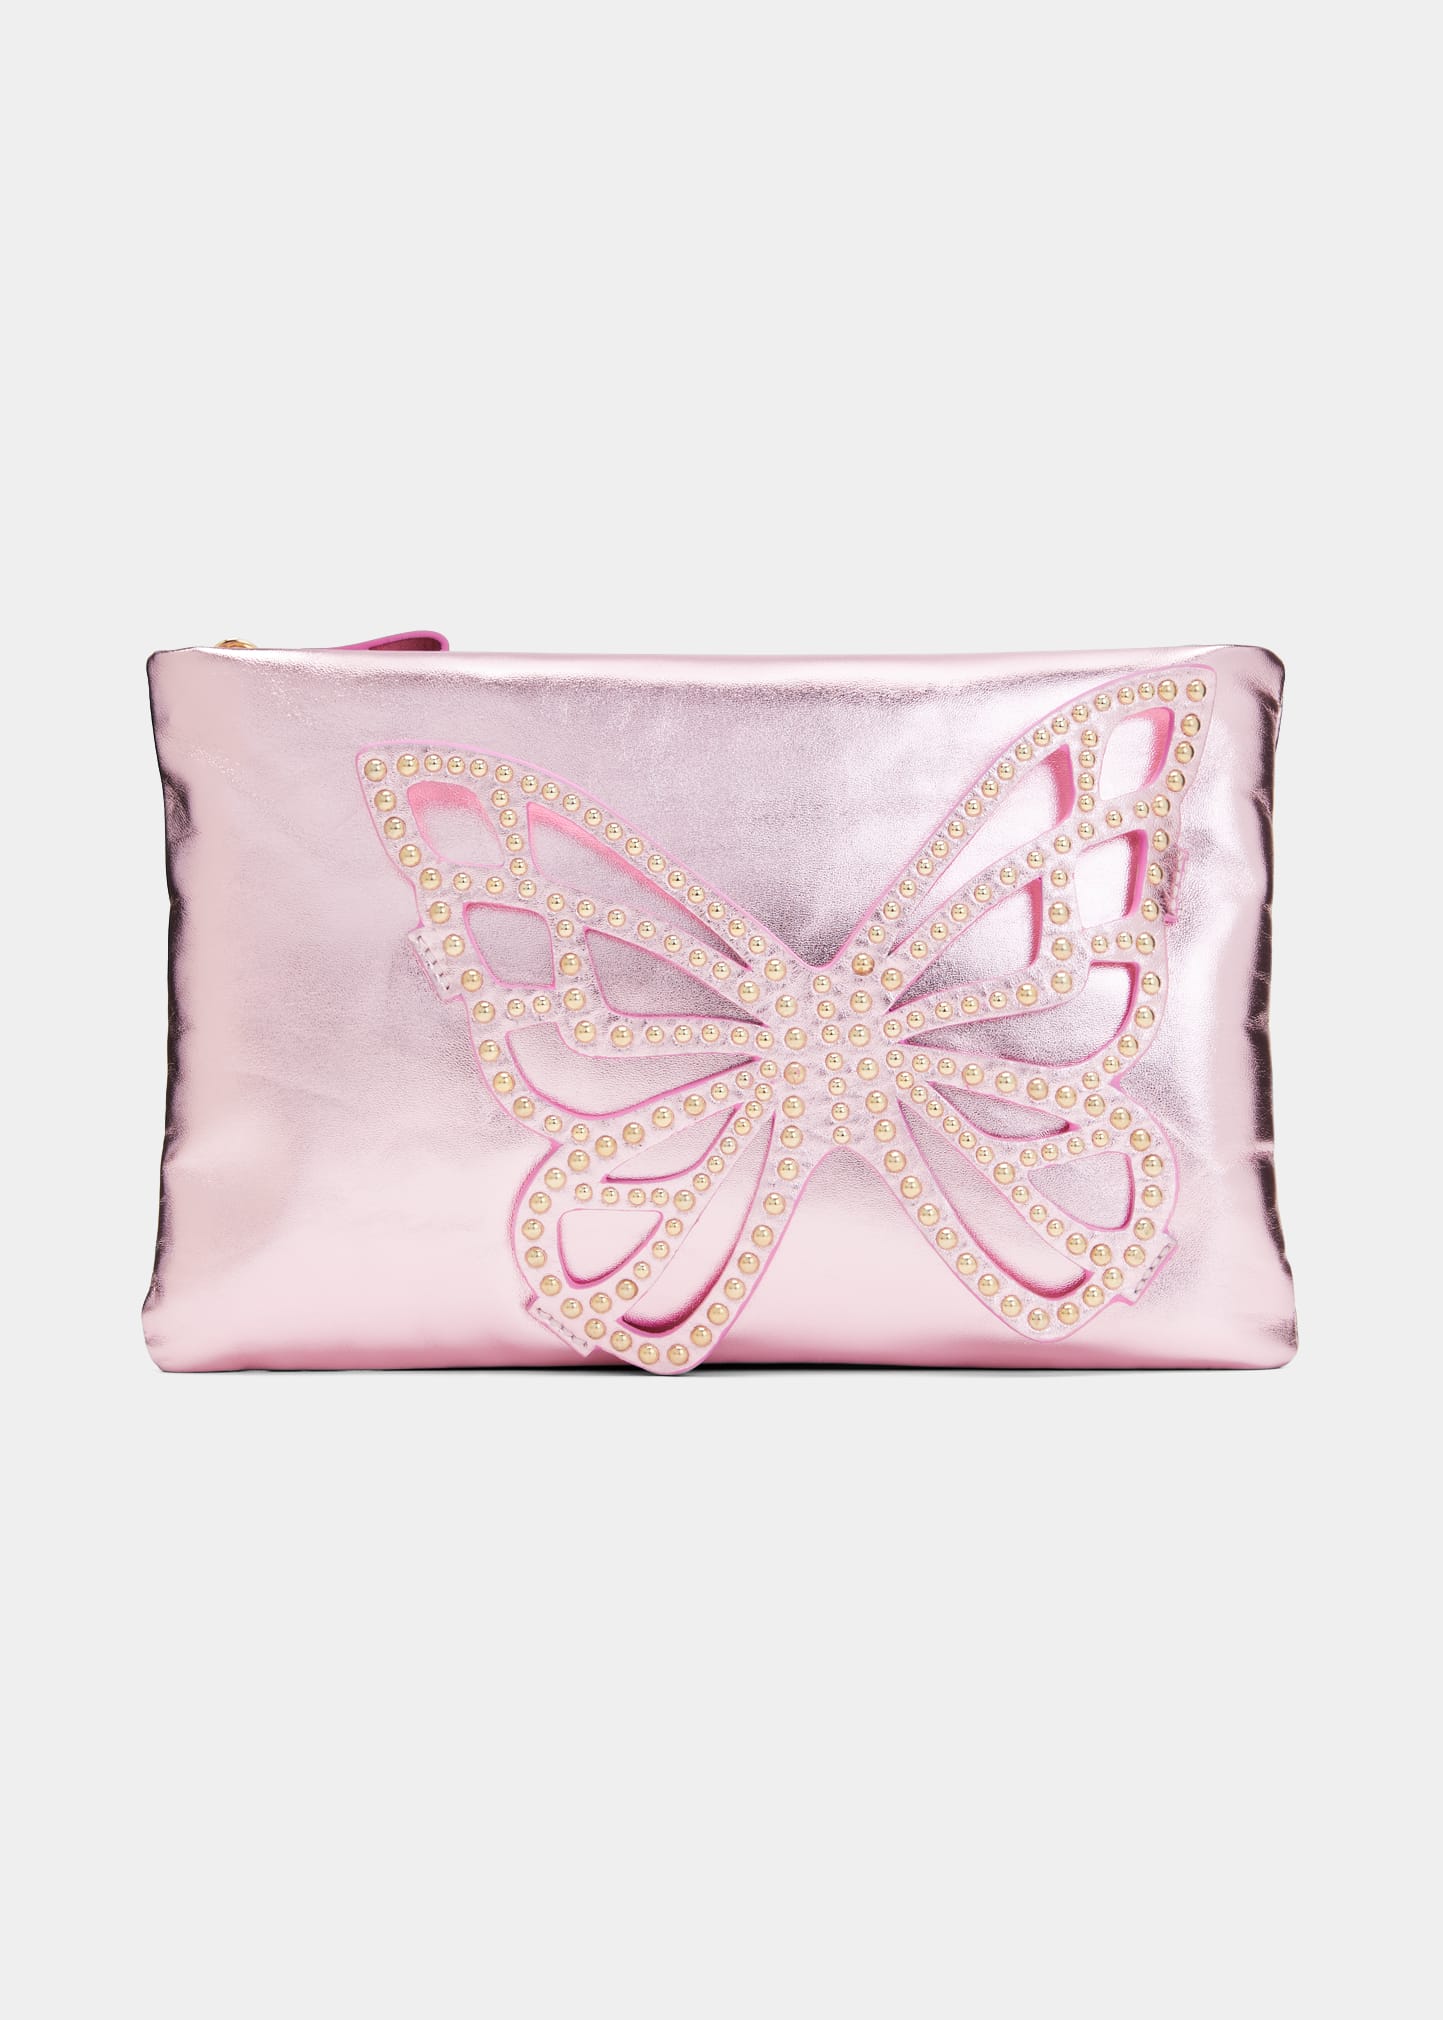 Sophia Webster Flossy Studded Butterfly Metallic Clutch Bag